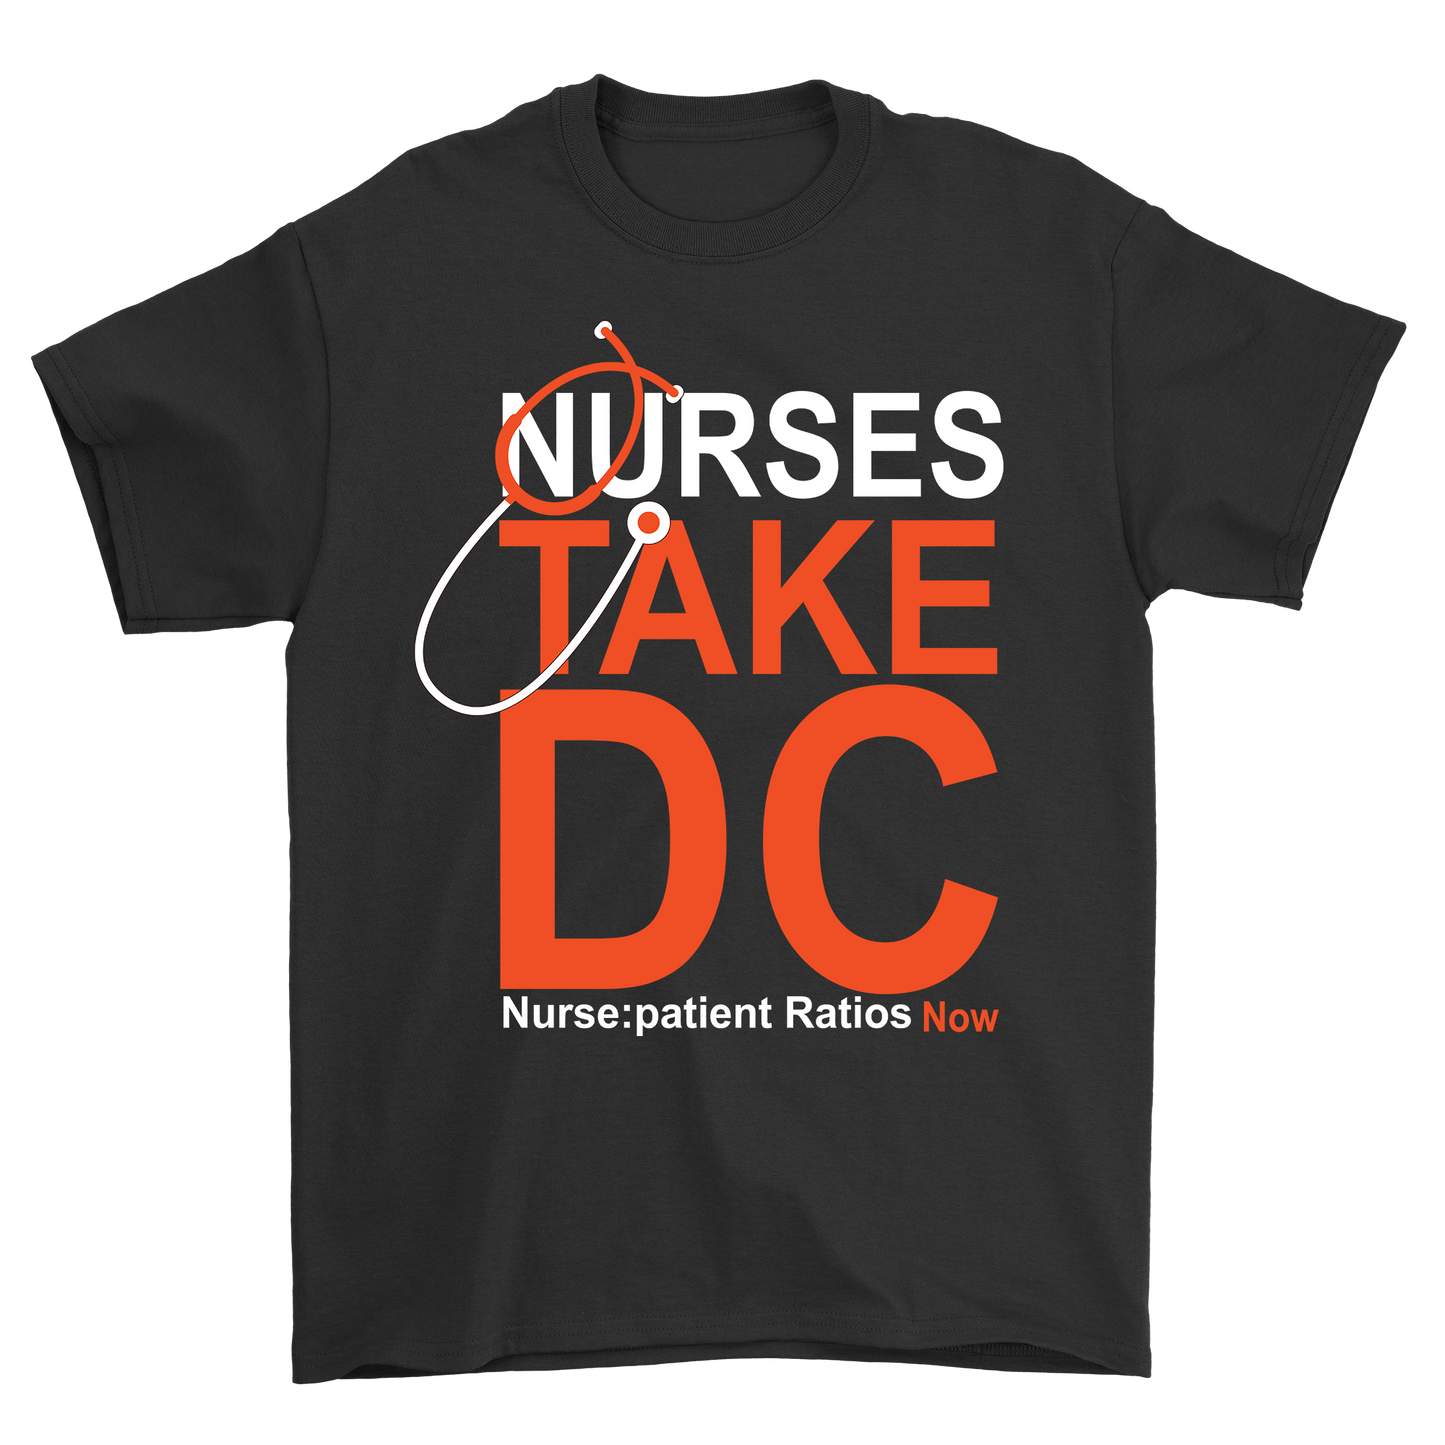 Nurses take dc nurse patient t-shirt - Premium t-shirt from MyDesigns - Just $21.95! Shop now at Lees Krazy Teez